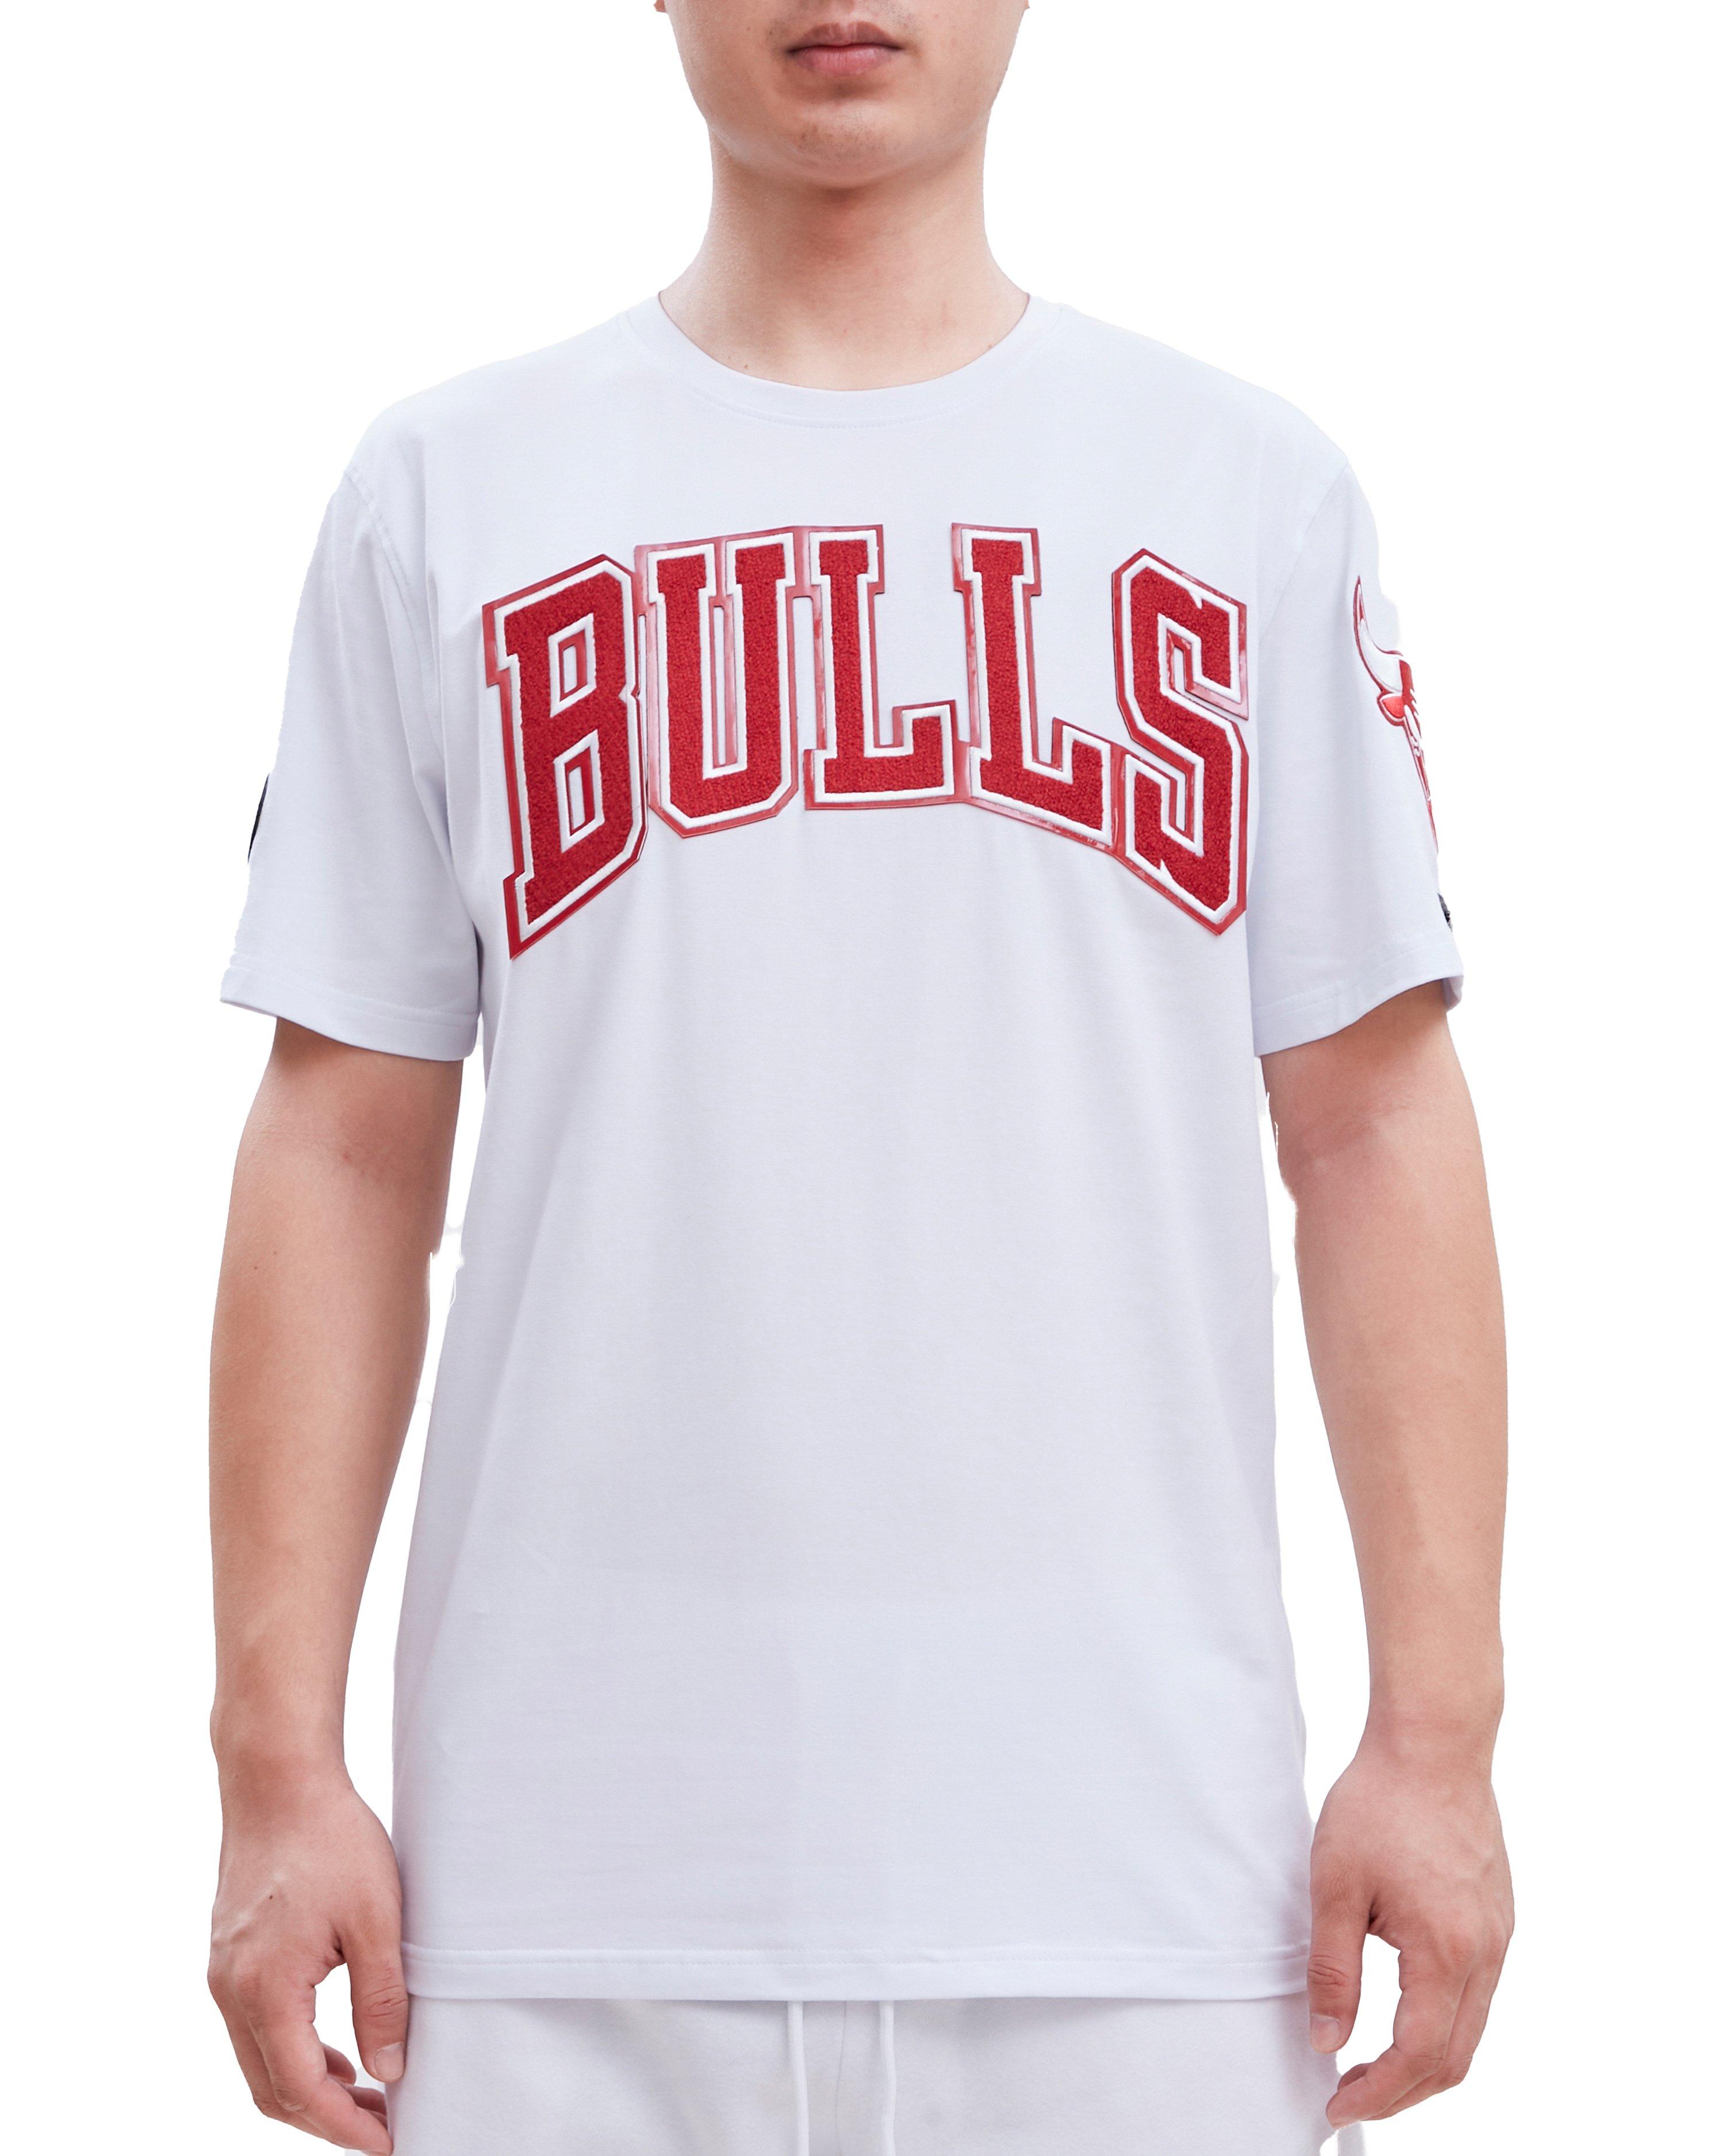 Premium Chicago Football Ringer Shirt - Chitown Clothing M